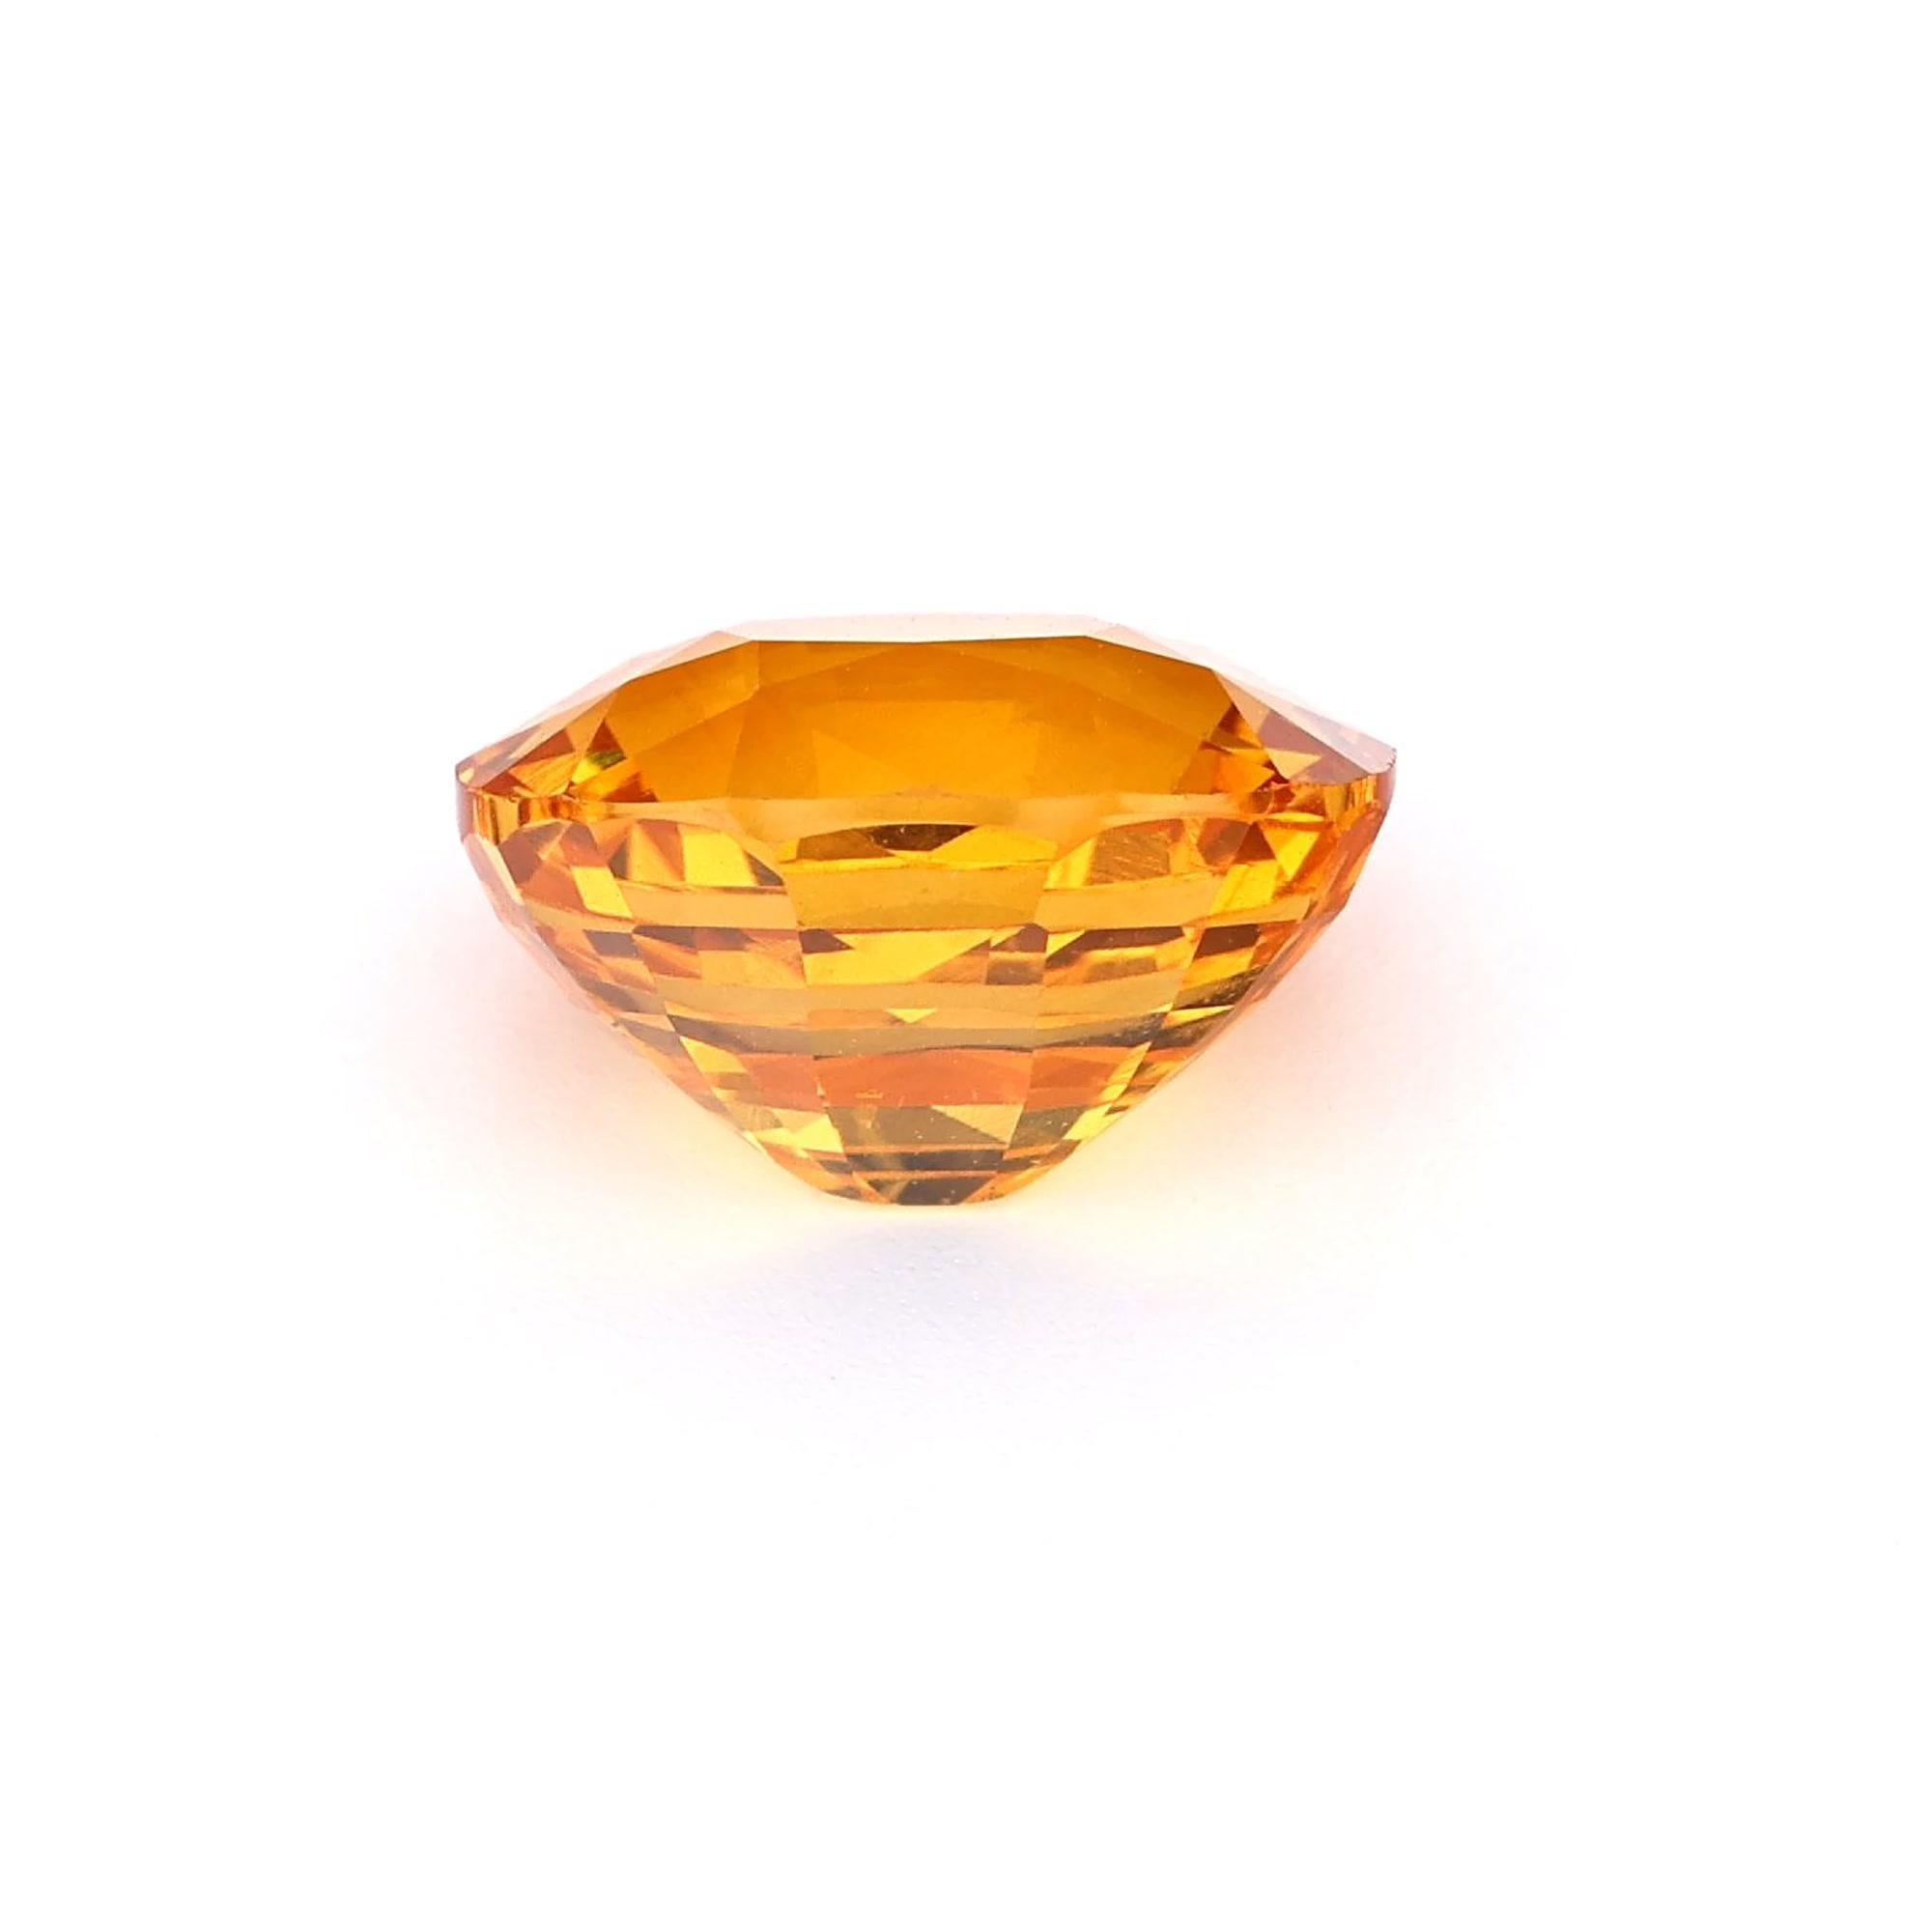 Certified 5.15 ct Natural Yellow Sapphire Ceylon Origin Ring Stone For Sale 1